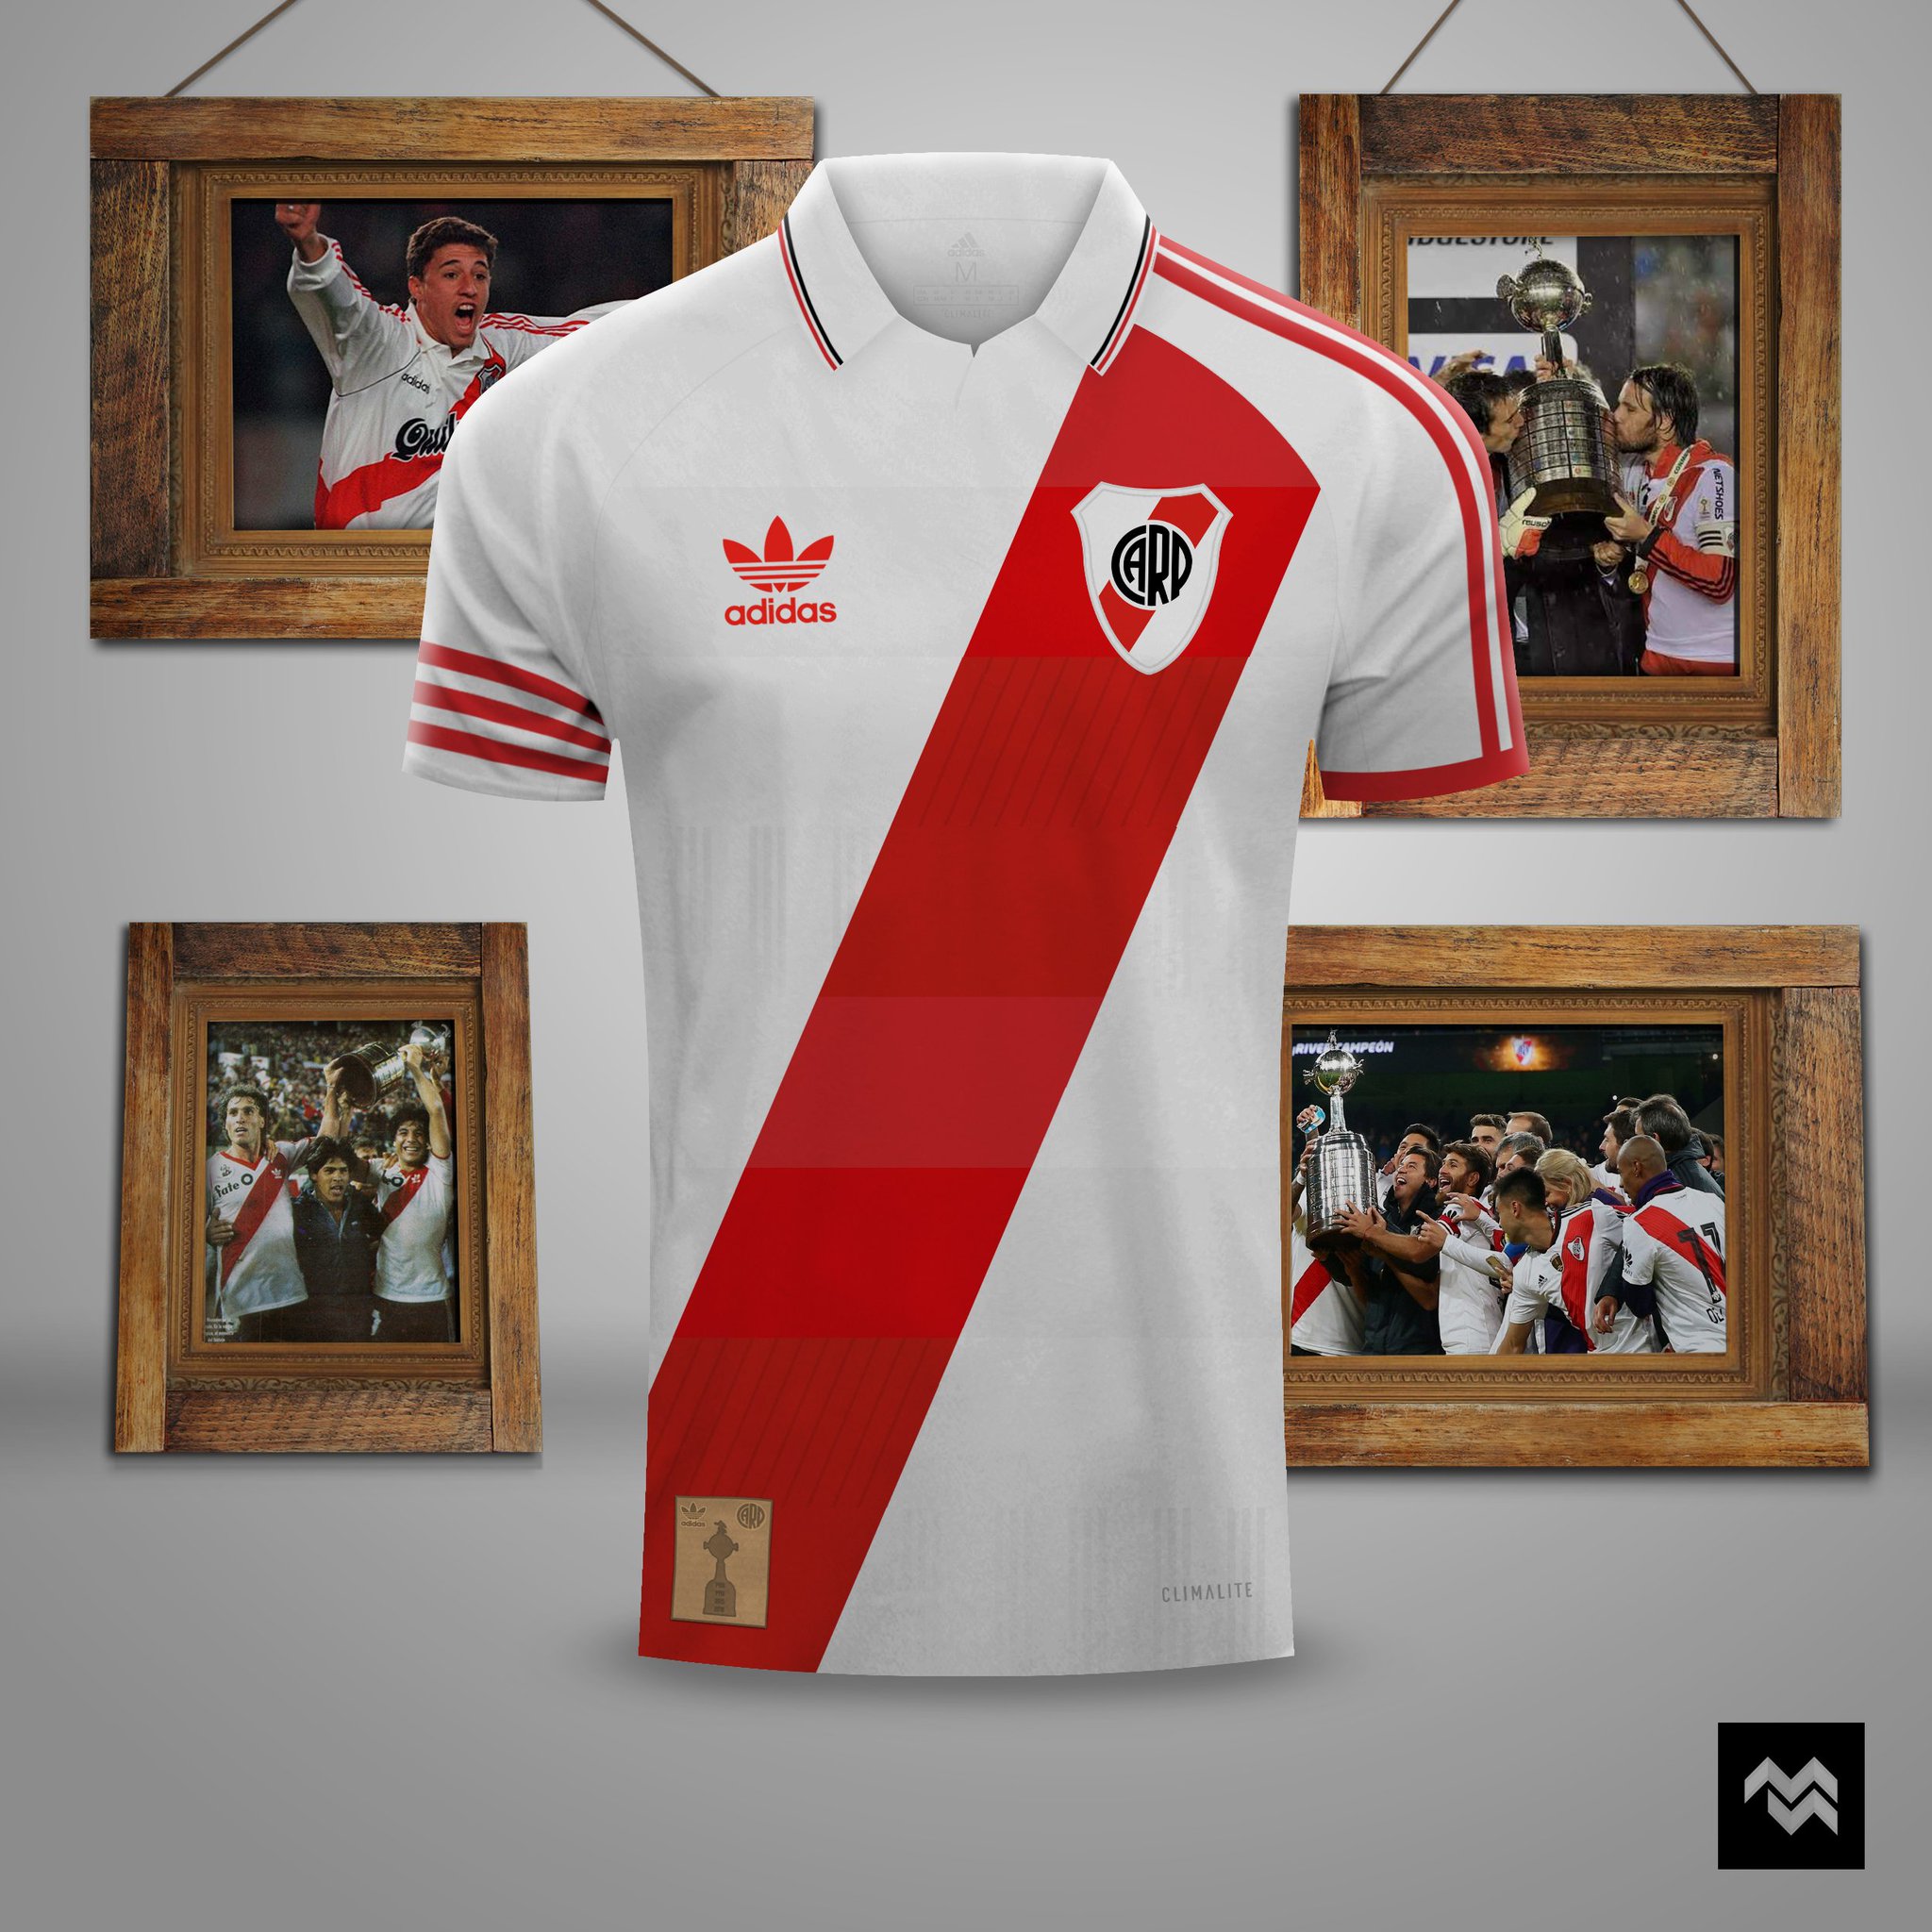 PDR Camisas: River Plate Retrô 1986 / Adidas